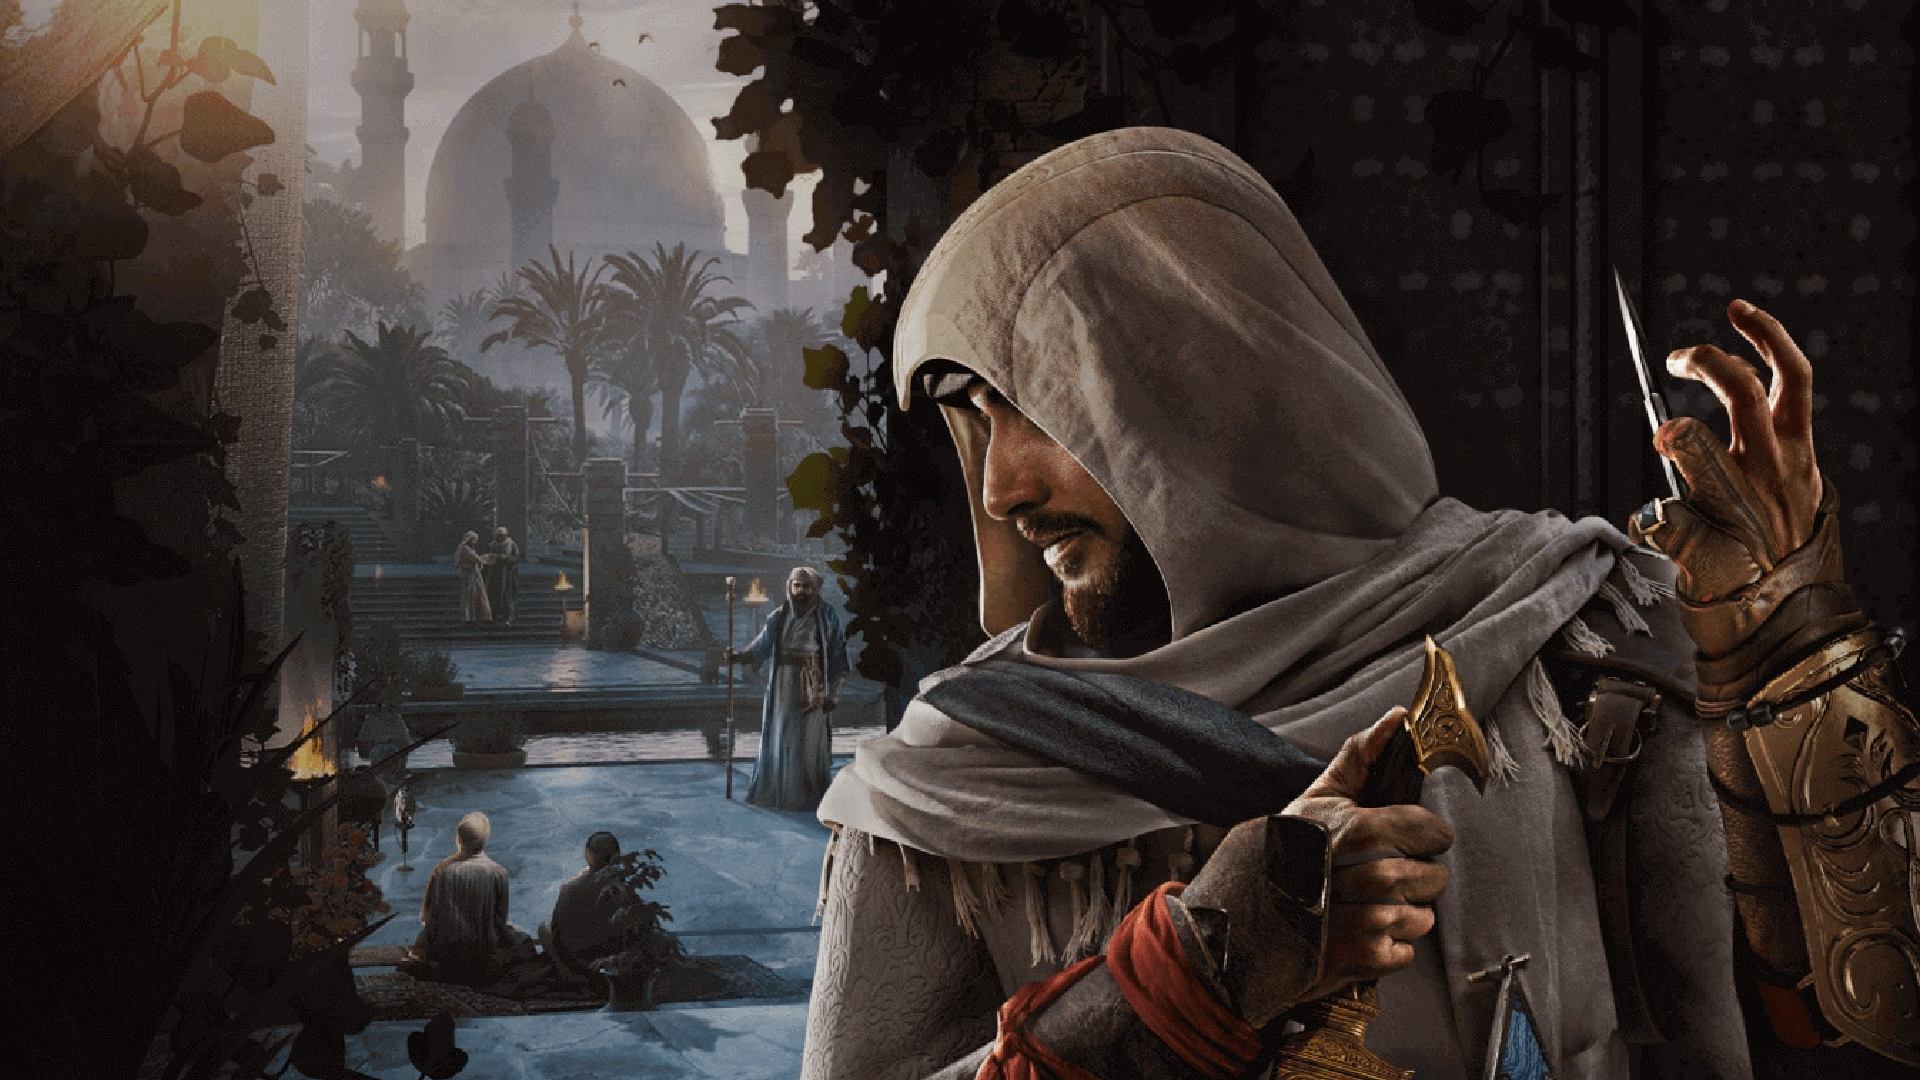 Assassin's Creed Mirage: Basim can be seen overlooking a garden